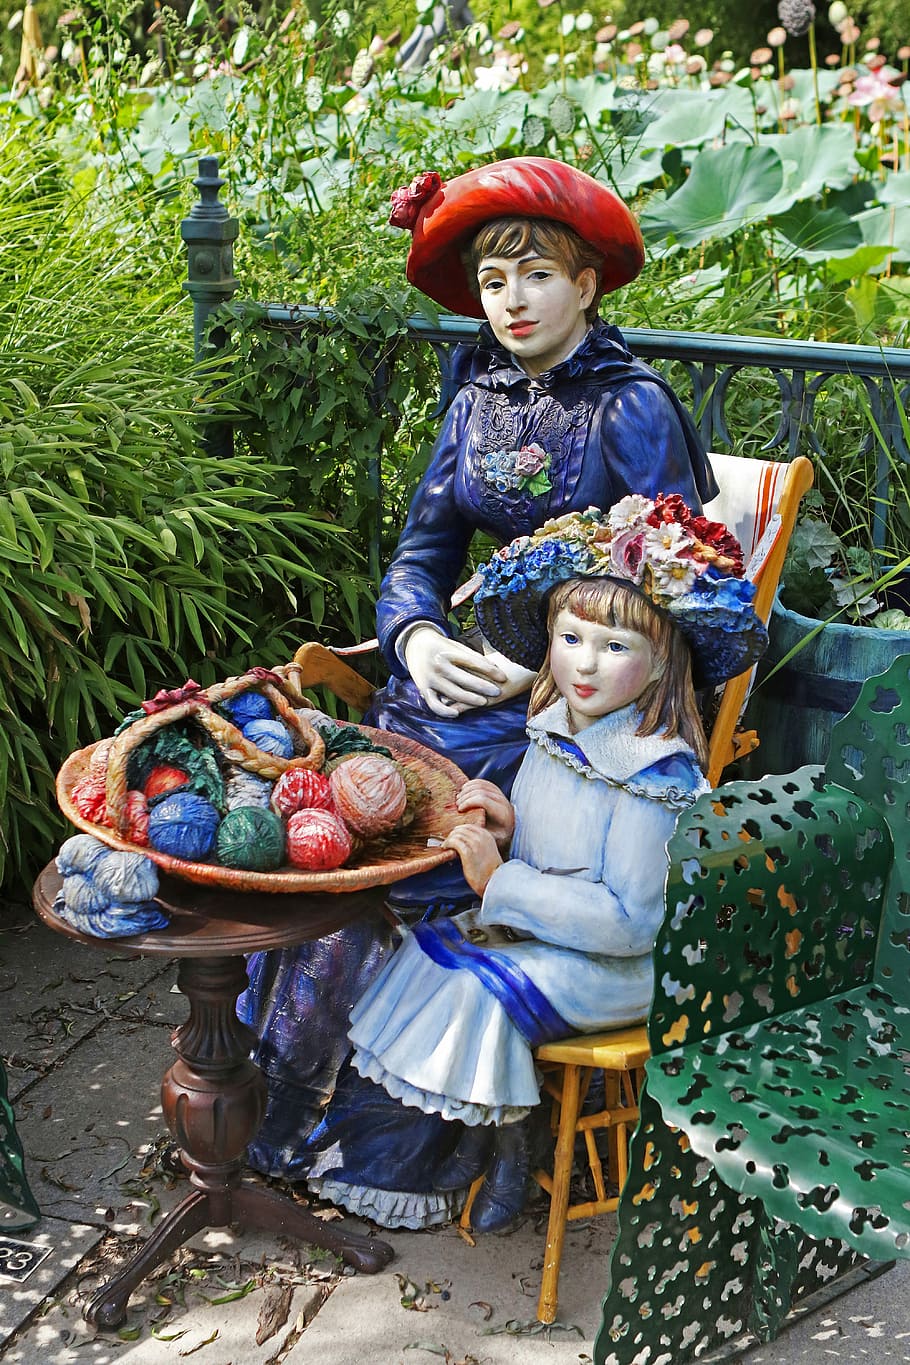 Grounds For Sculpture, Renoir, woman, girl, basket of yarn